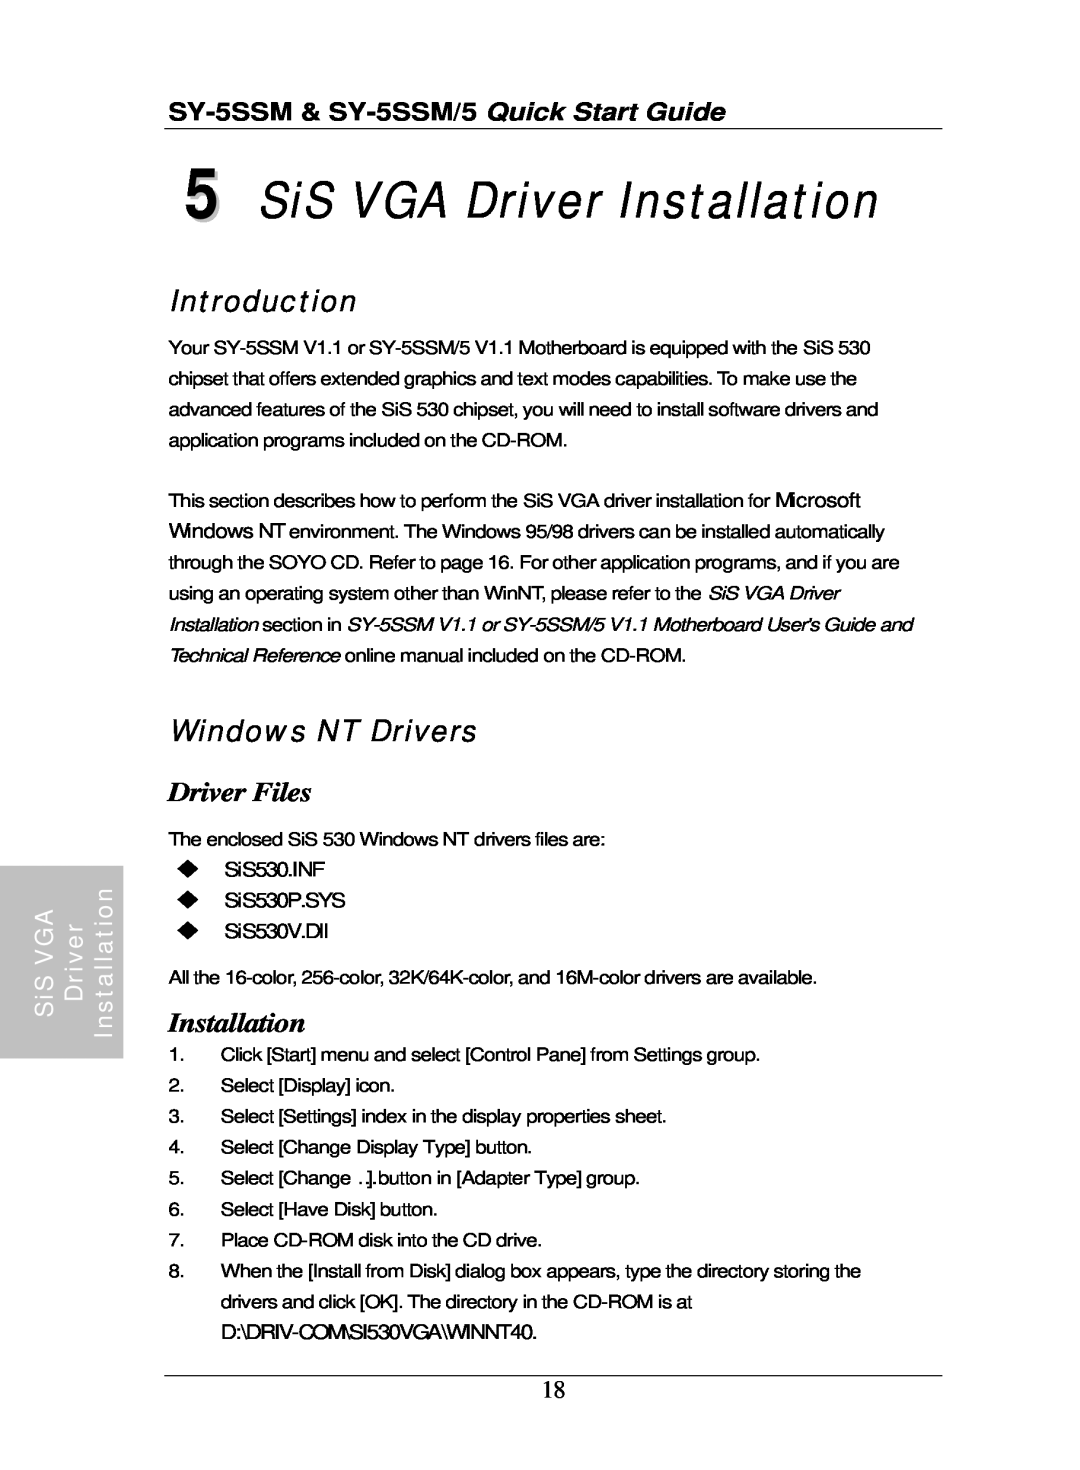 SOYO SY-5SSM/5 SiS VGA Driver Installation, Introduction, Windows NT Drivers, Driver Files, D\DRIV-COM\SI530VGA\WINNT40 